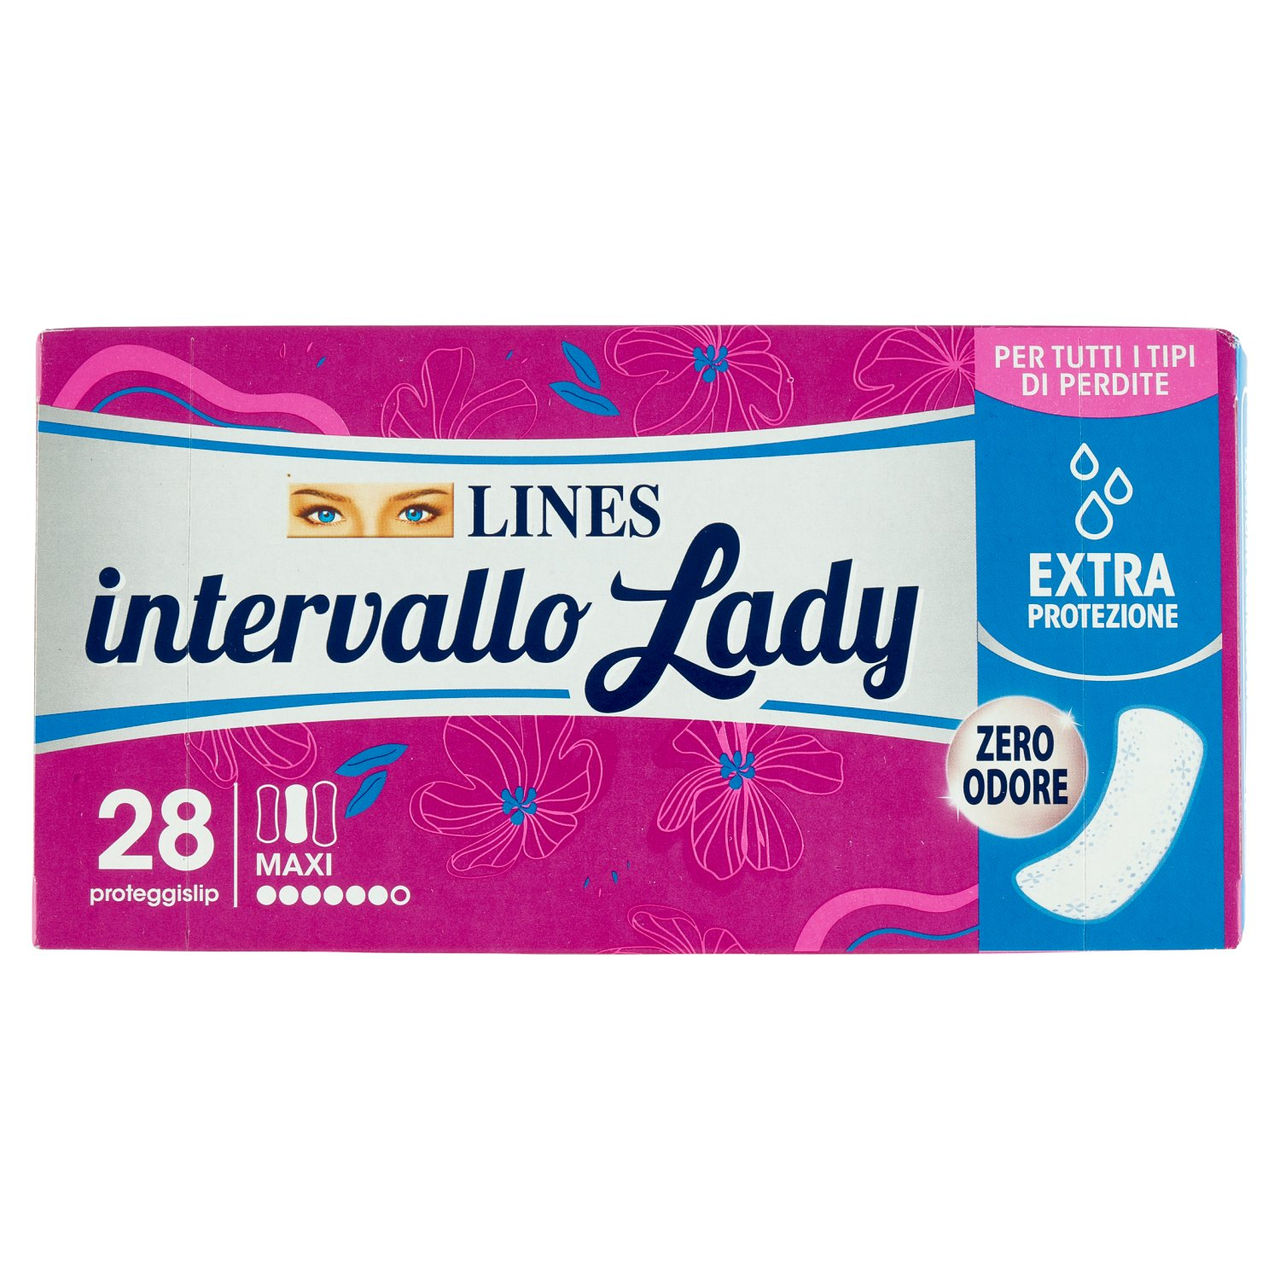 Lines Intervallo Lady Plus Maxi 28 pz online